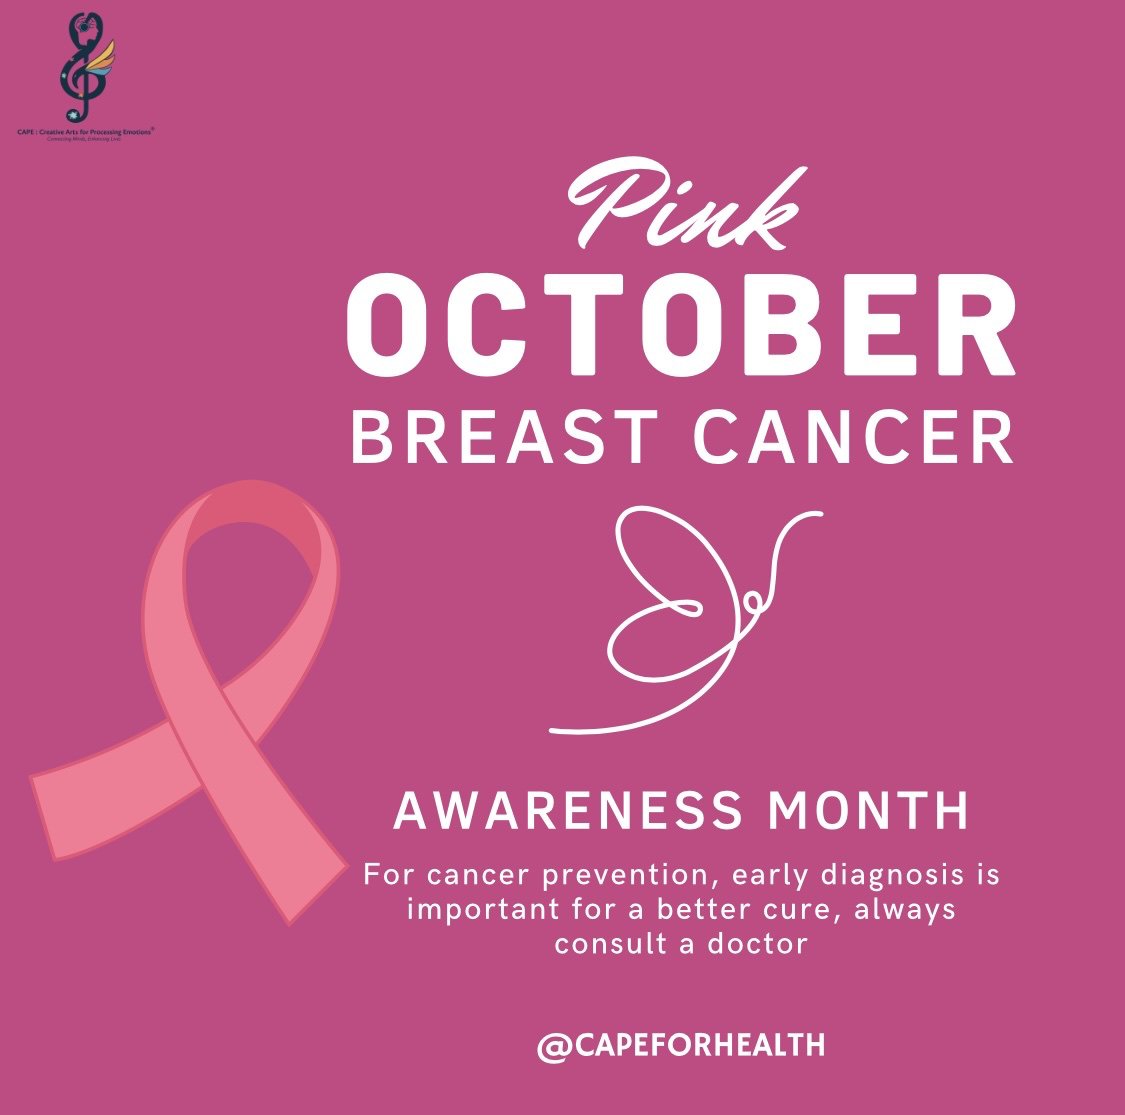 #mentalhealthawareness #breastcancer #awareness